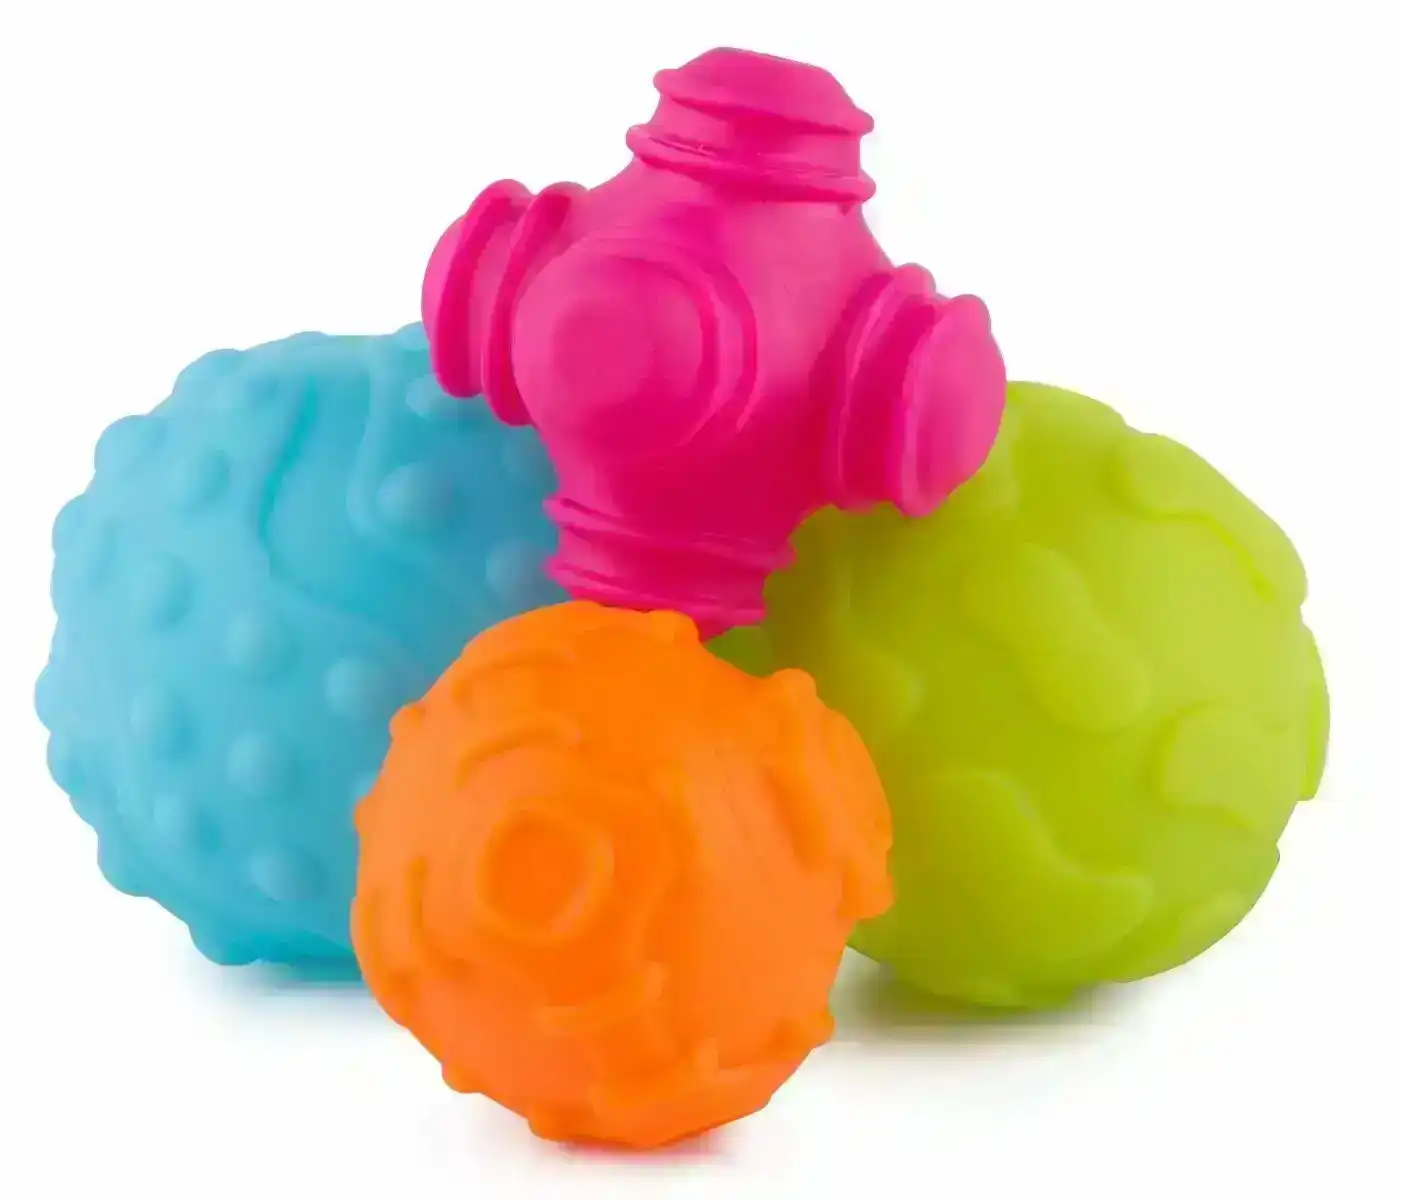 Playgro Textured Sensory Balls Tub/Shower Play/Fun Kids/Baby Bath Toy 6m+